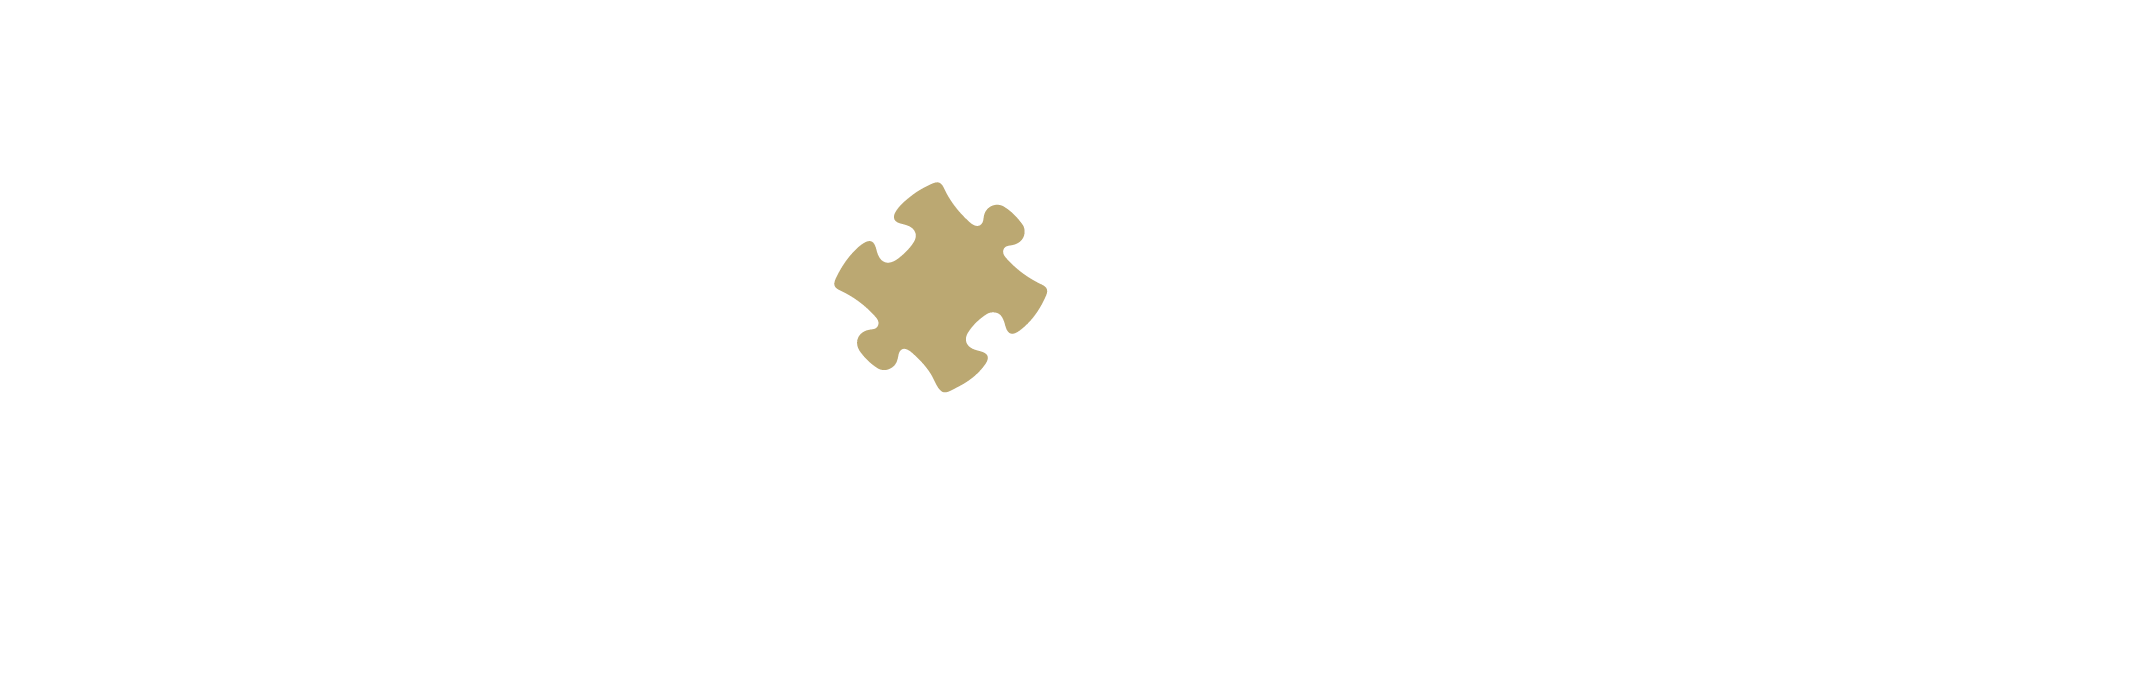 Paul Scott & Associates